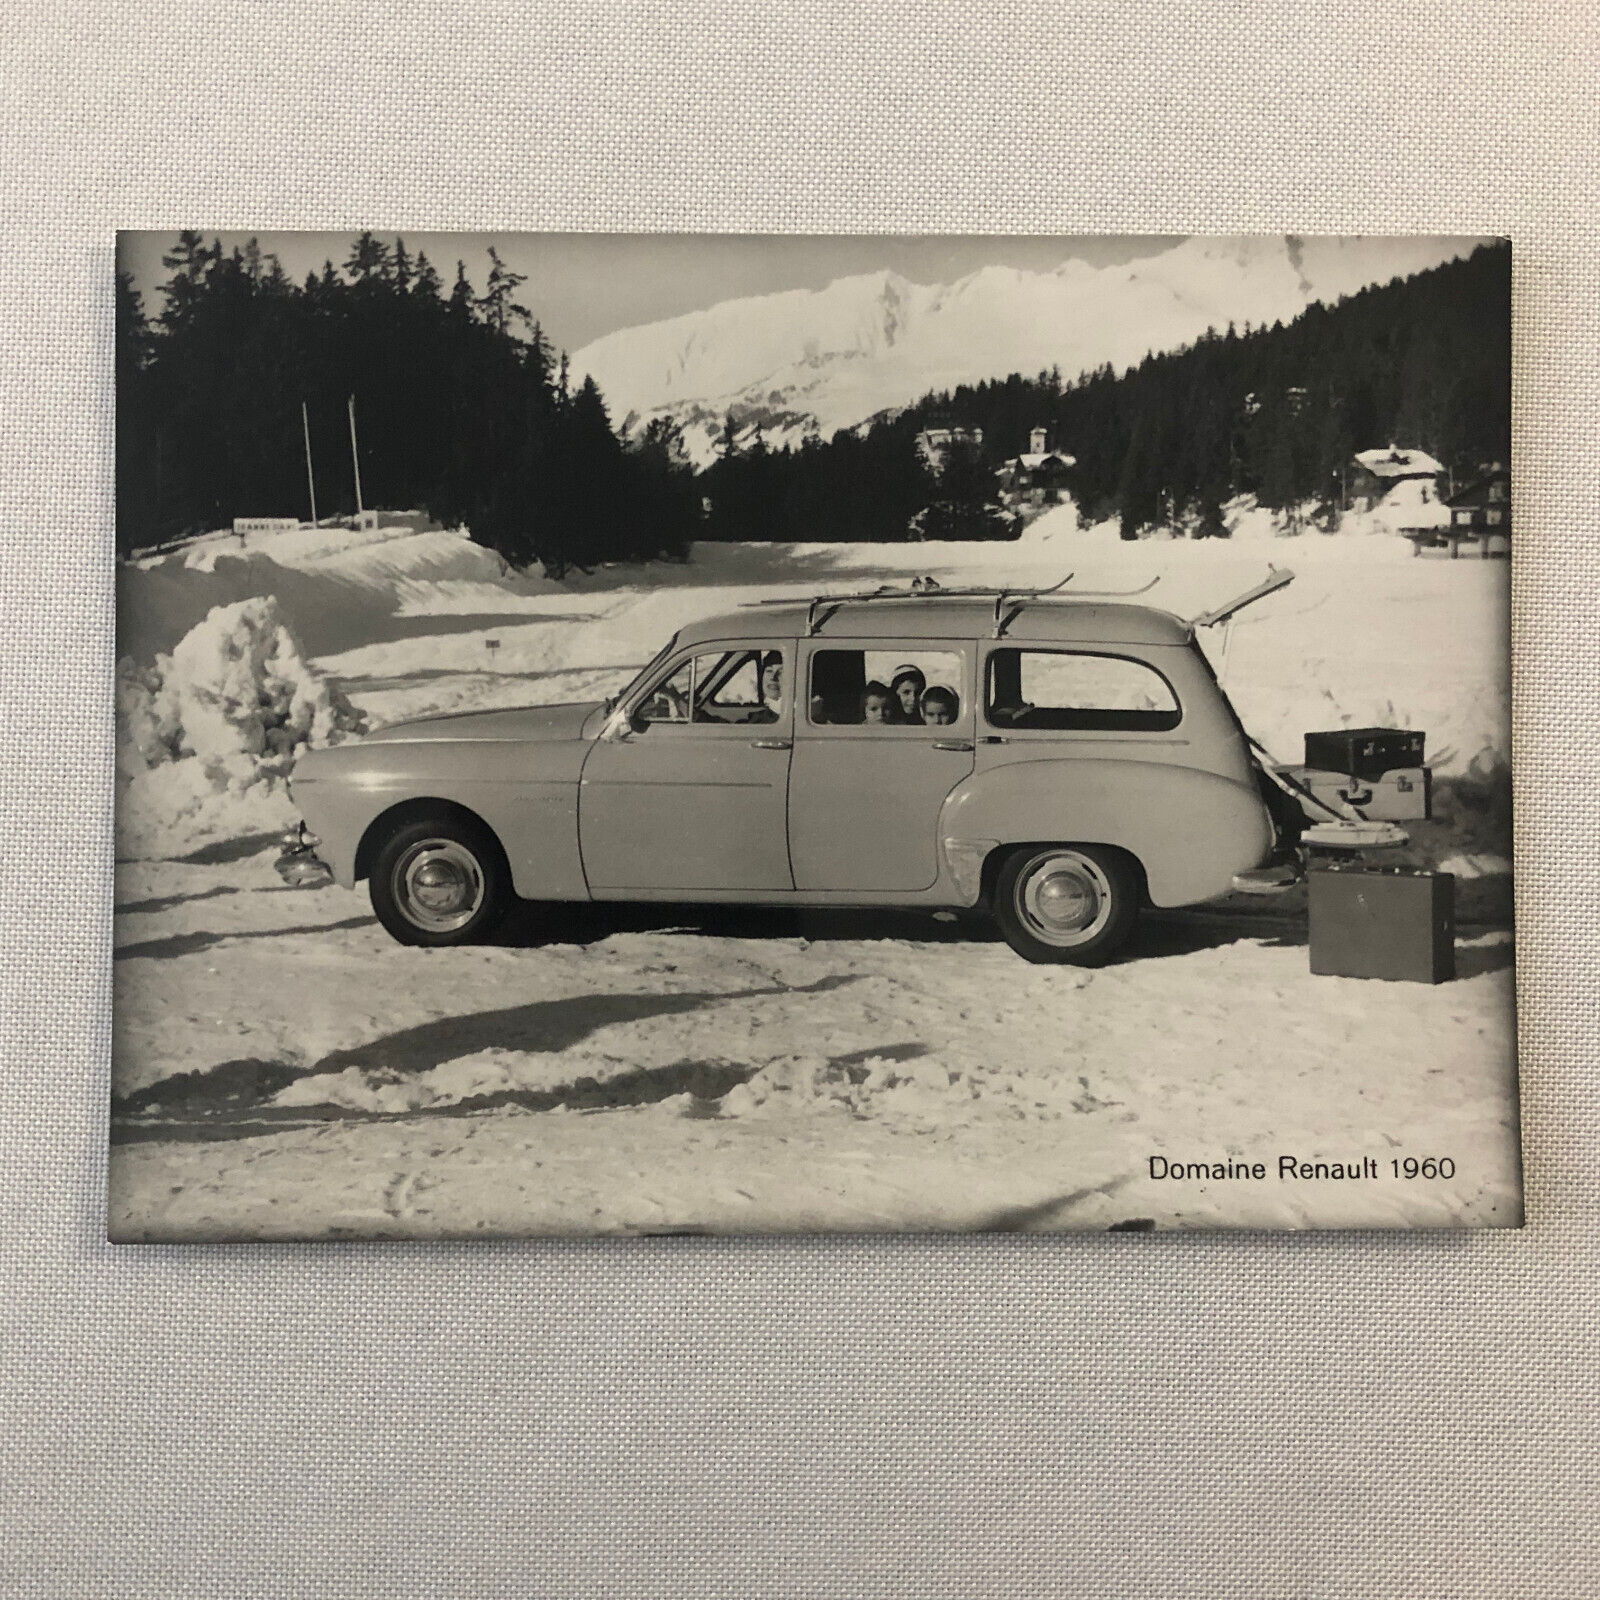 1960 Renault Domaine Station Wagon Car Factory Press Photo Photograph